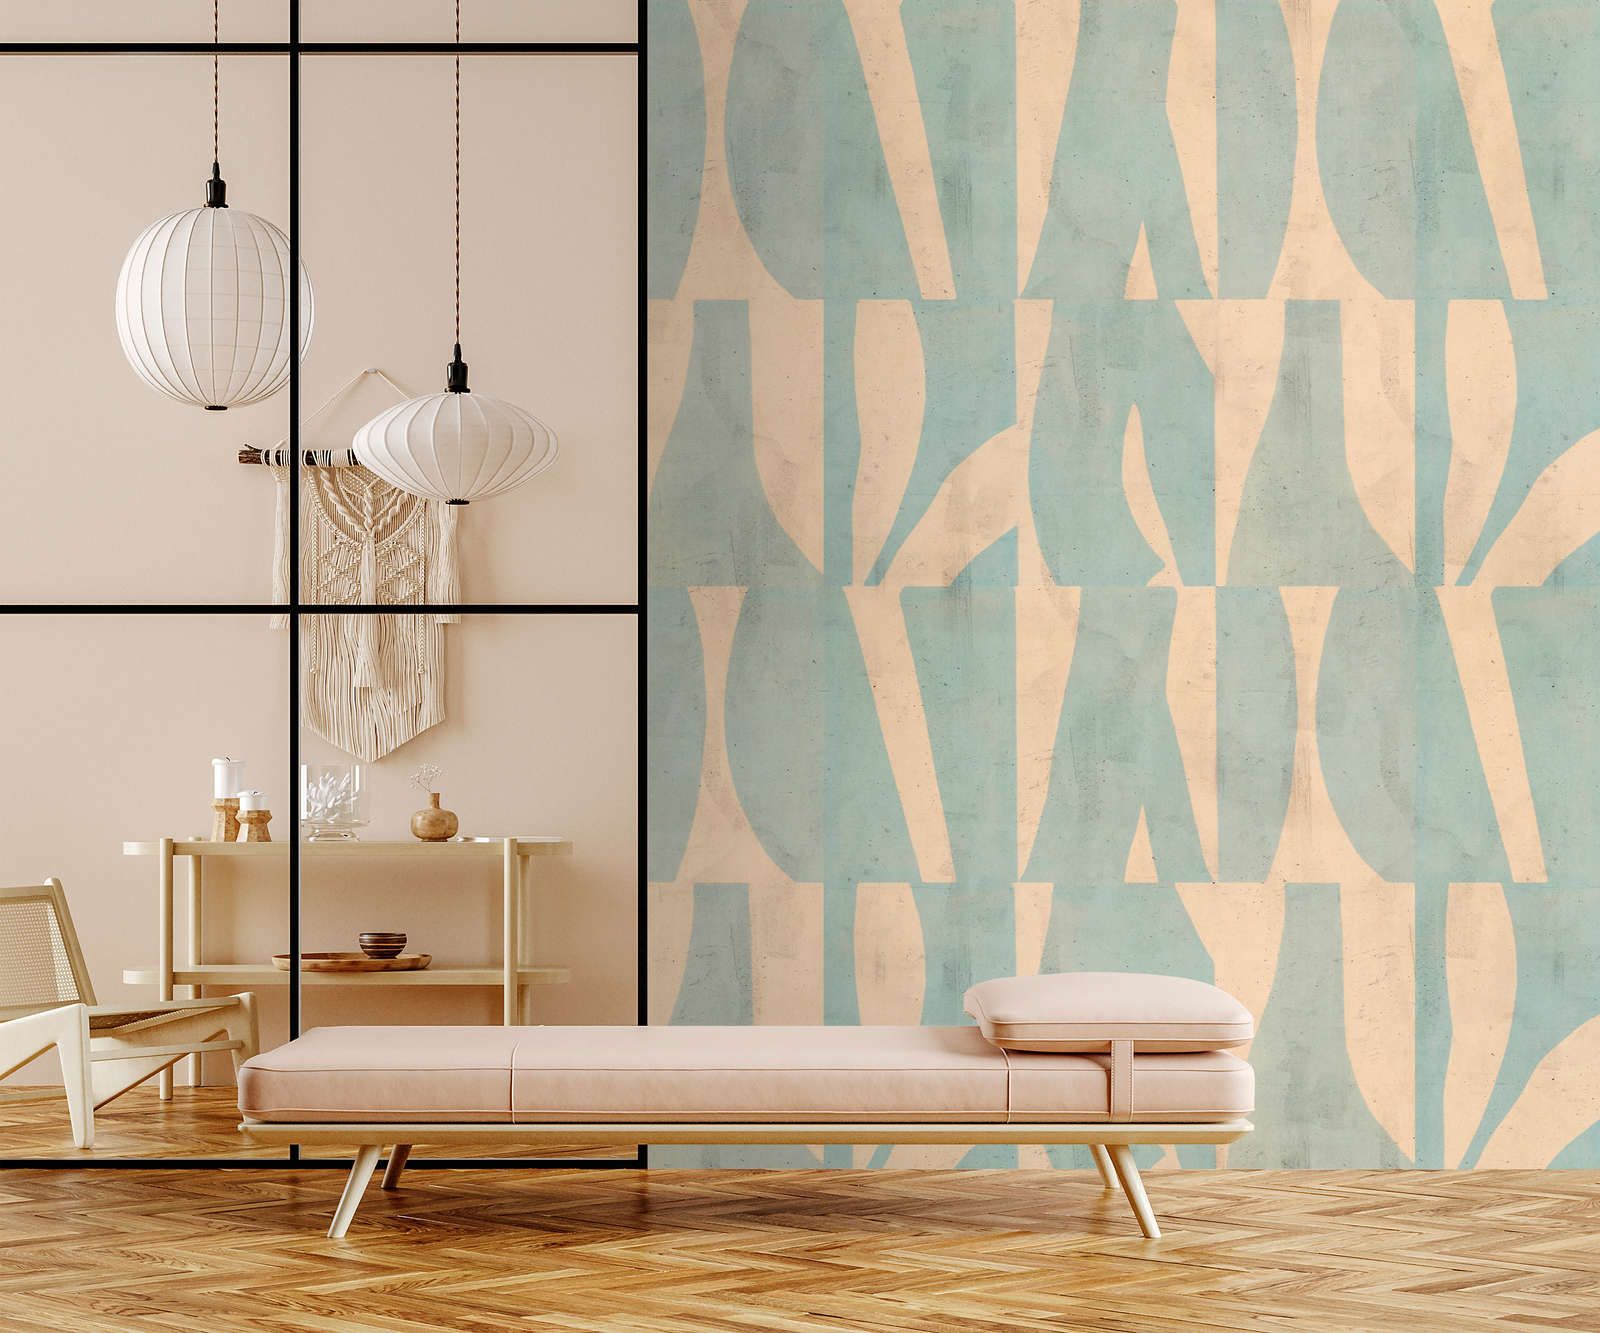             Photo wallpaper »laila« - Graphic pattern on concrete plaster texture - Beige, mint green | Light textured non-woven
        